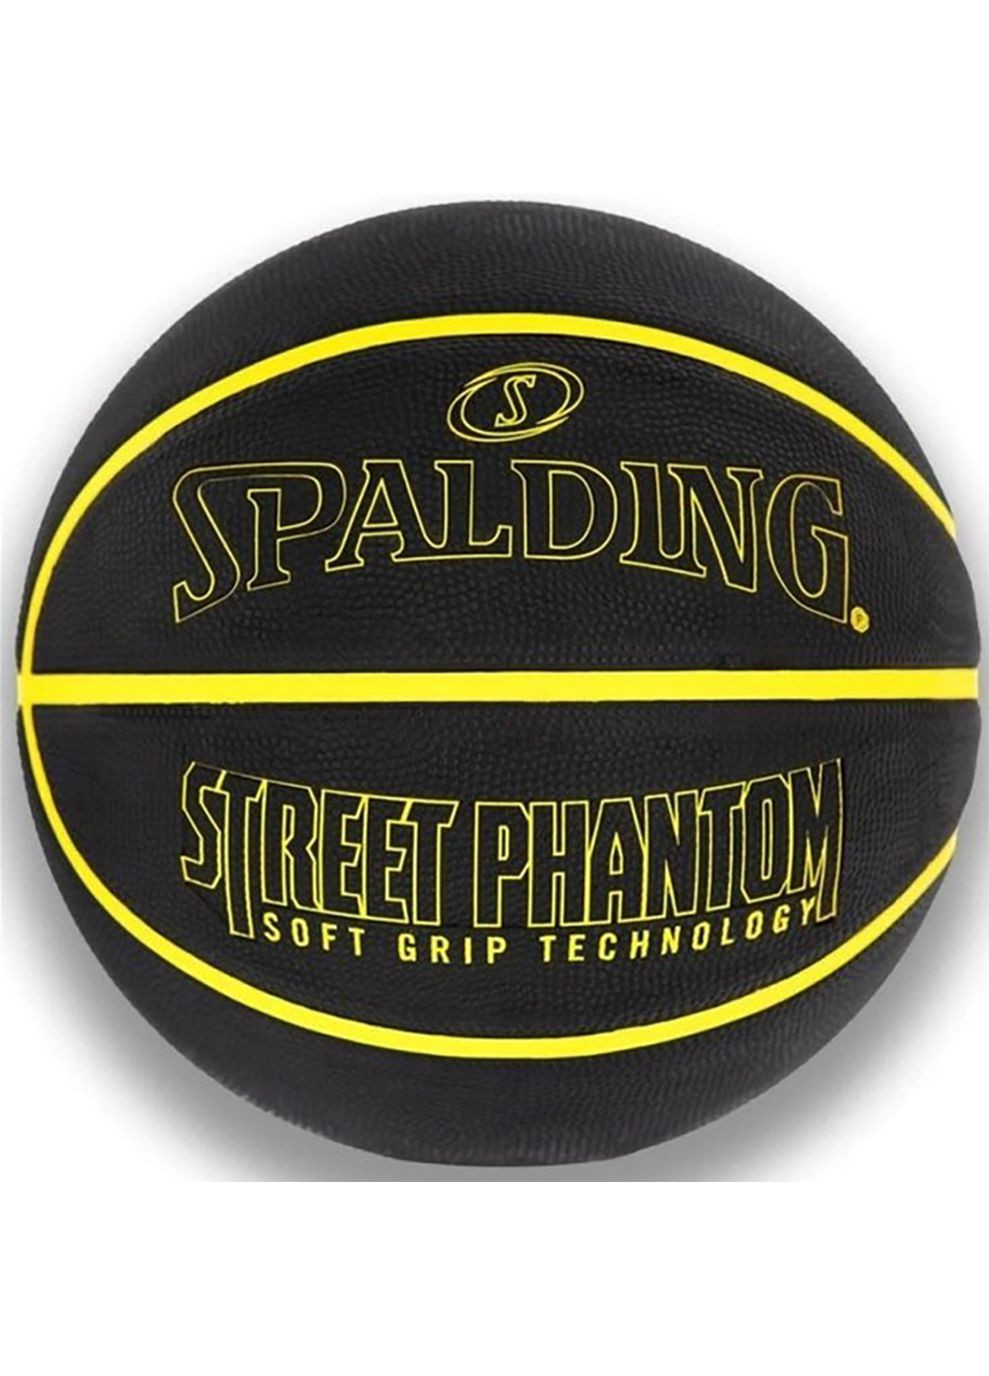 Баскетбольный Мяч Street Phantom черный, желтый Уни 7 Spalding (268746944)